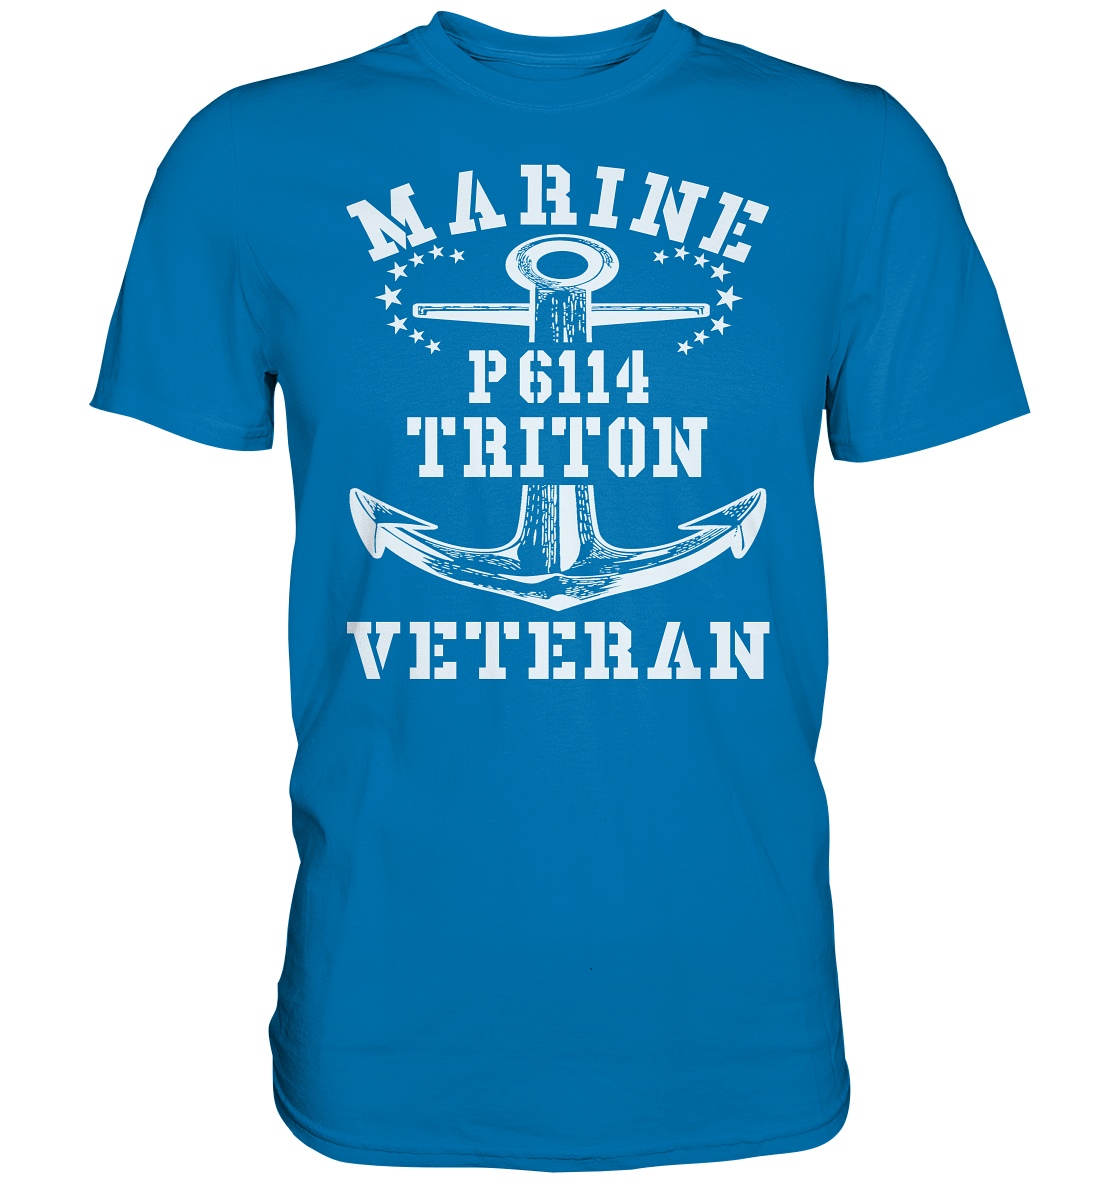 U-Jagdboot P6114 TRITON Marine Veteran - Premium Shirt